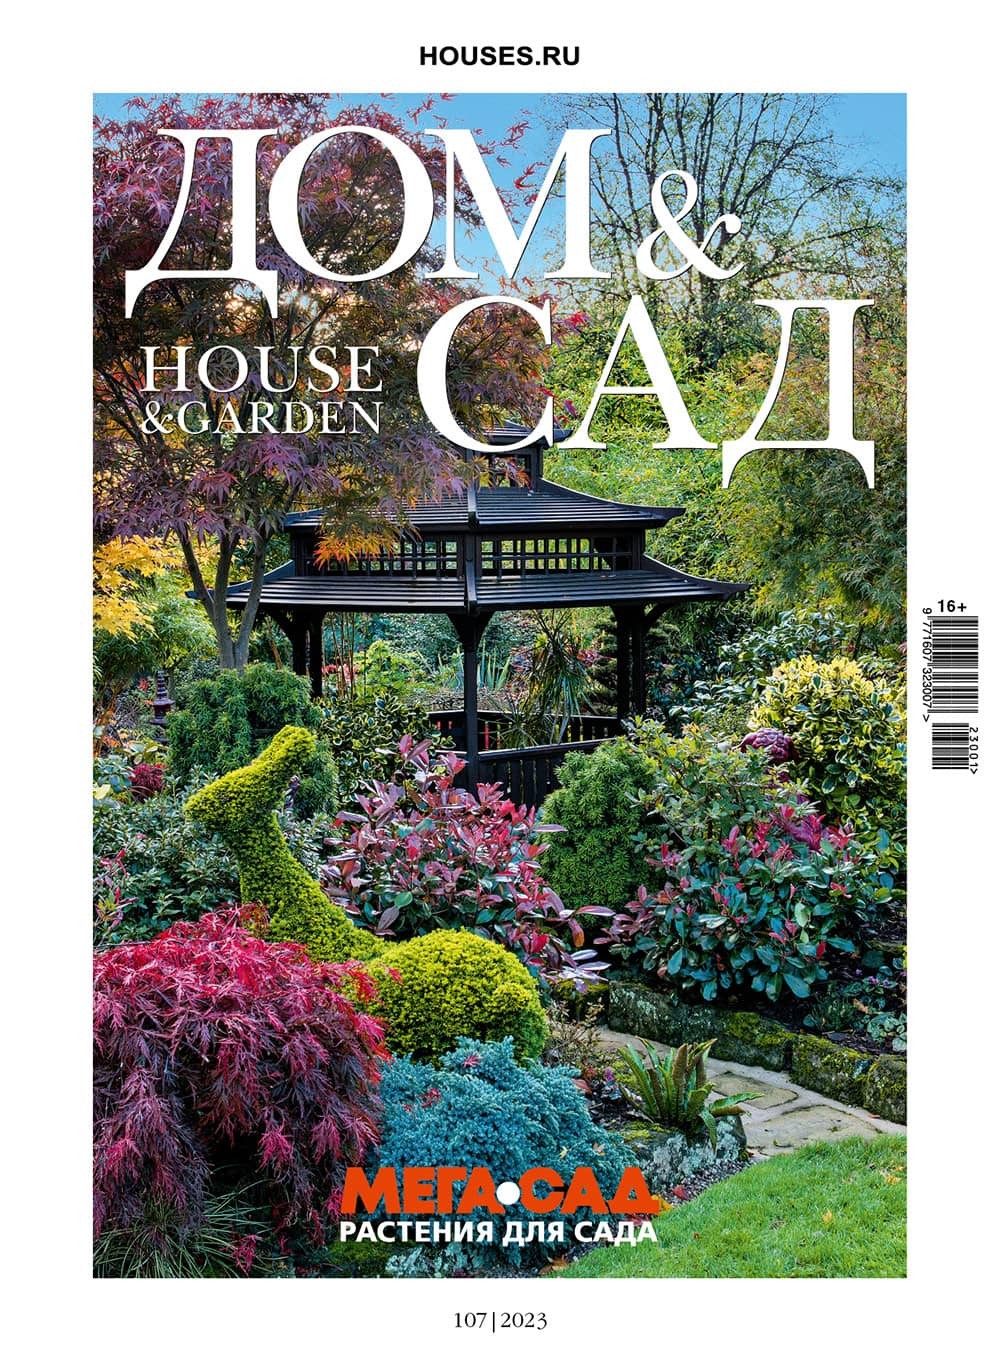 Home and Garden Magazine